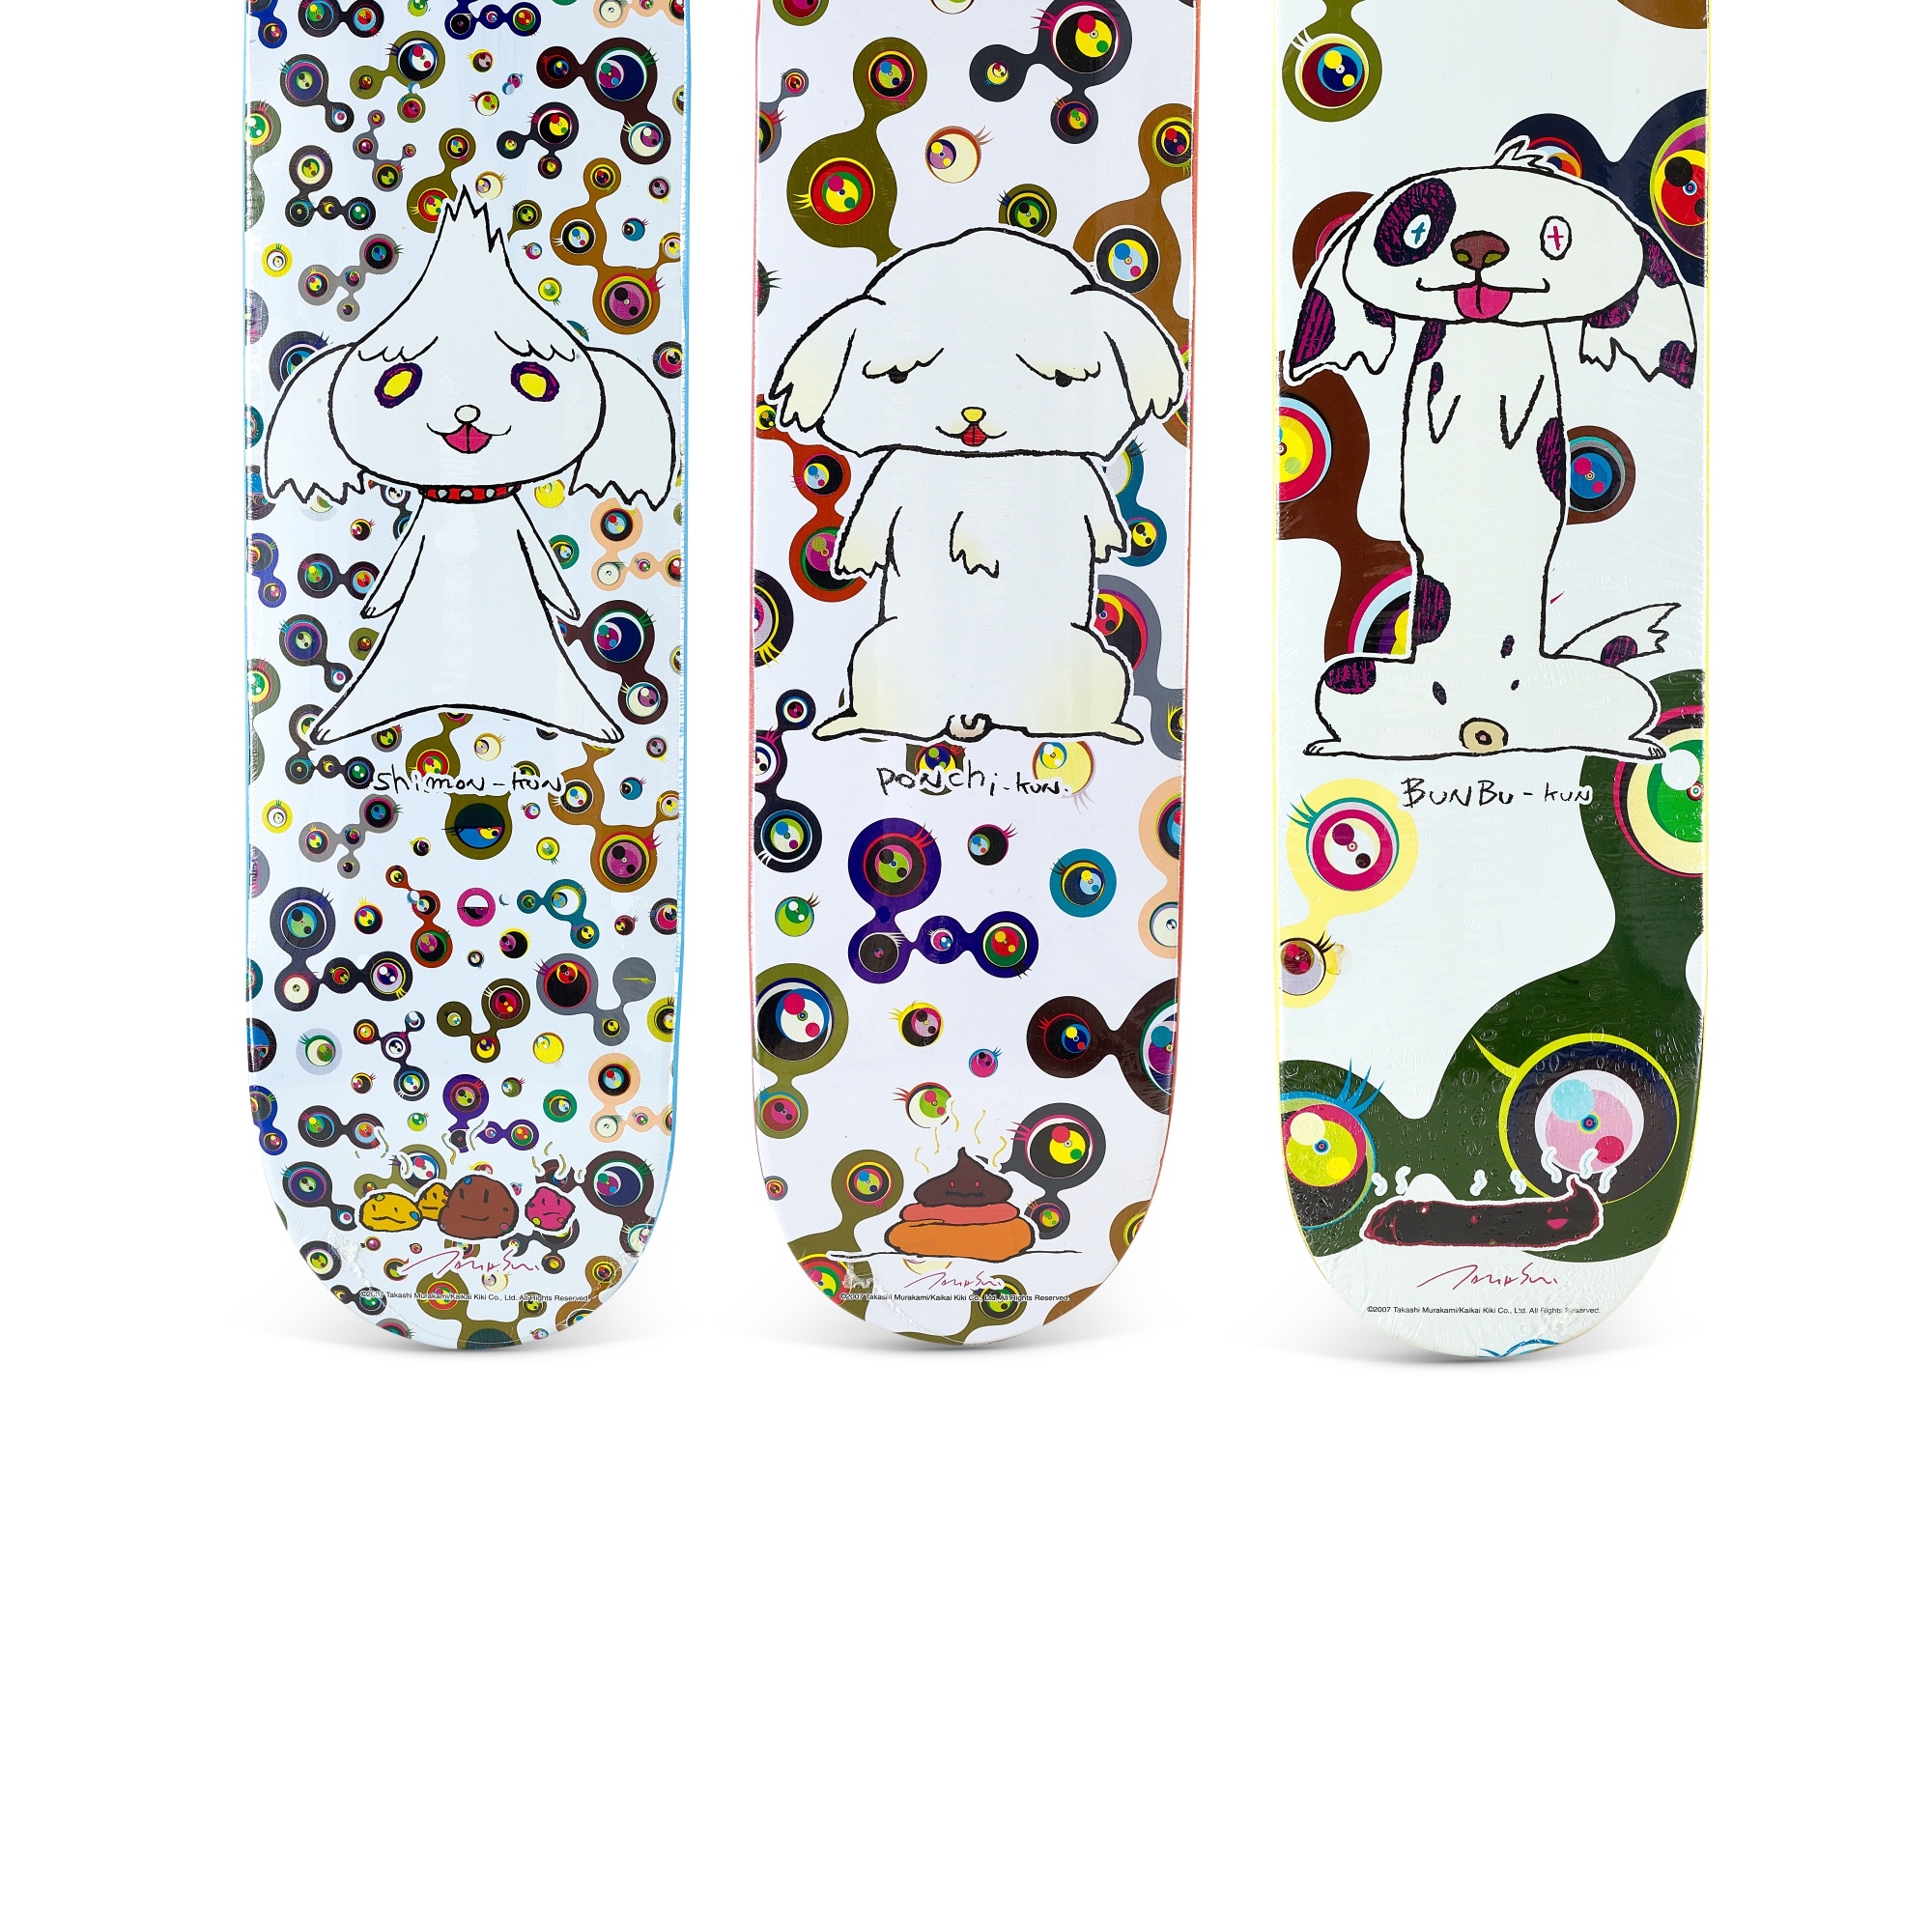 Takashi Murakami, Supreme, Takashi Murakami Supreme skateboard decks 2007  (set of 3 works) (2007), Available for Sale